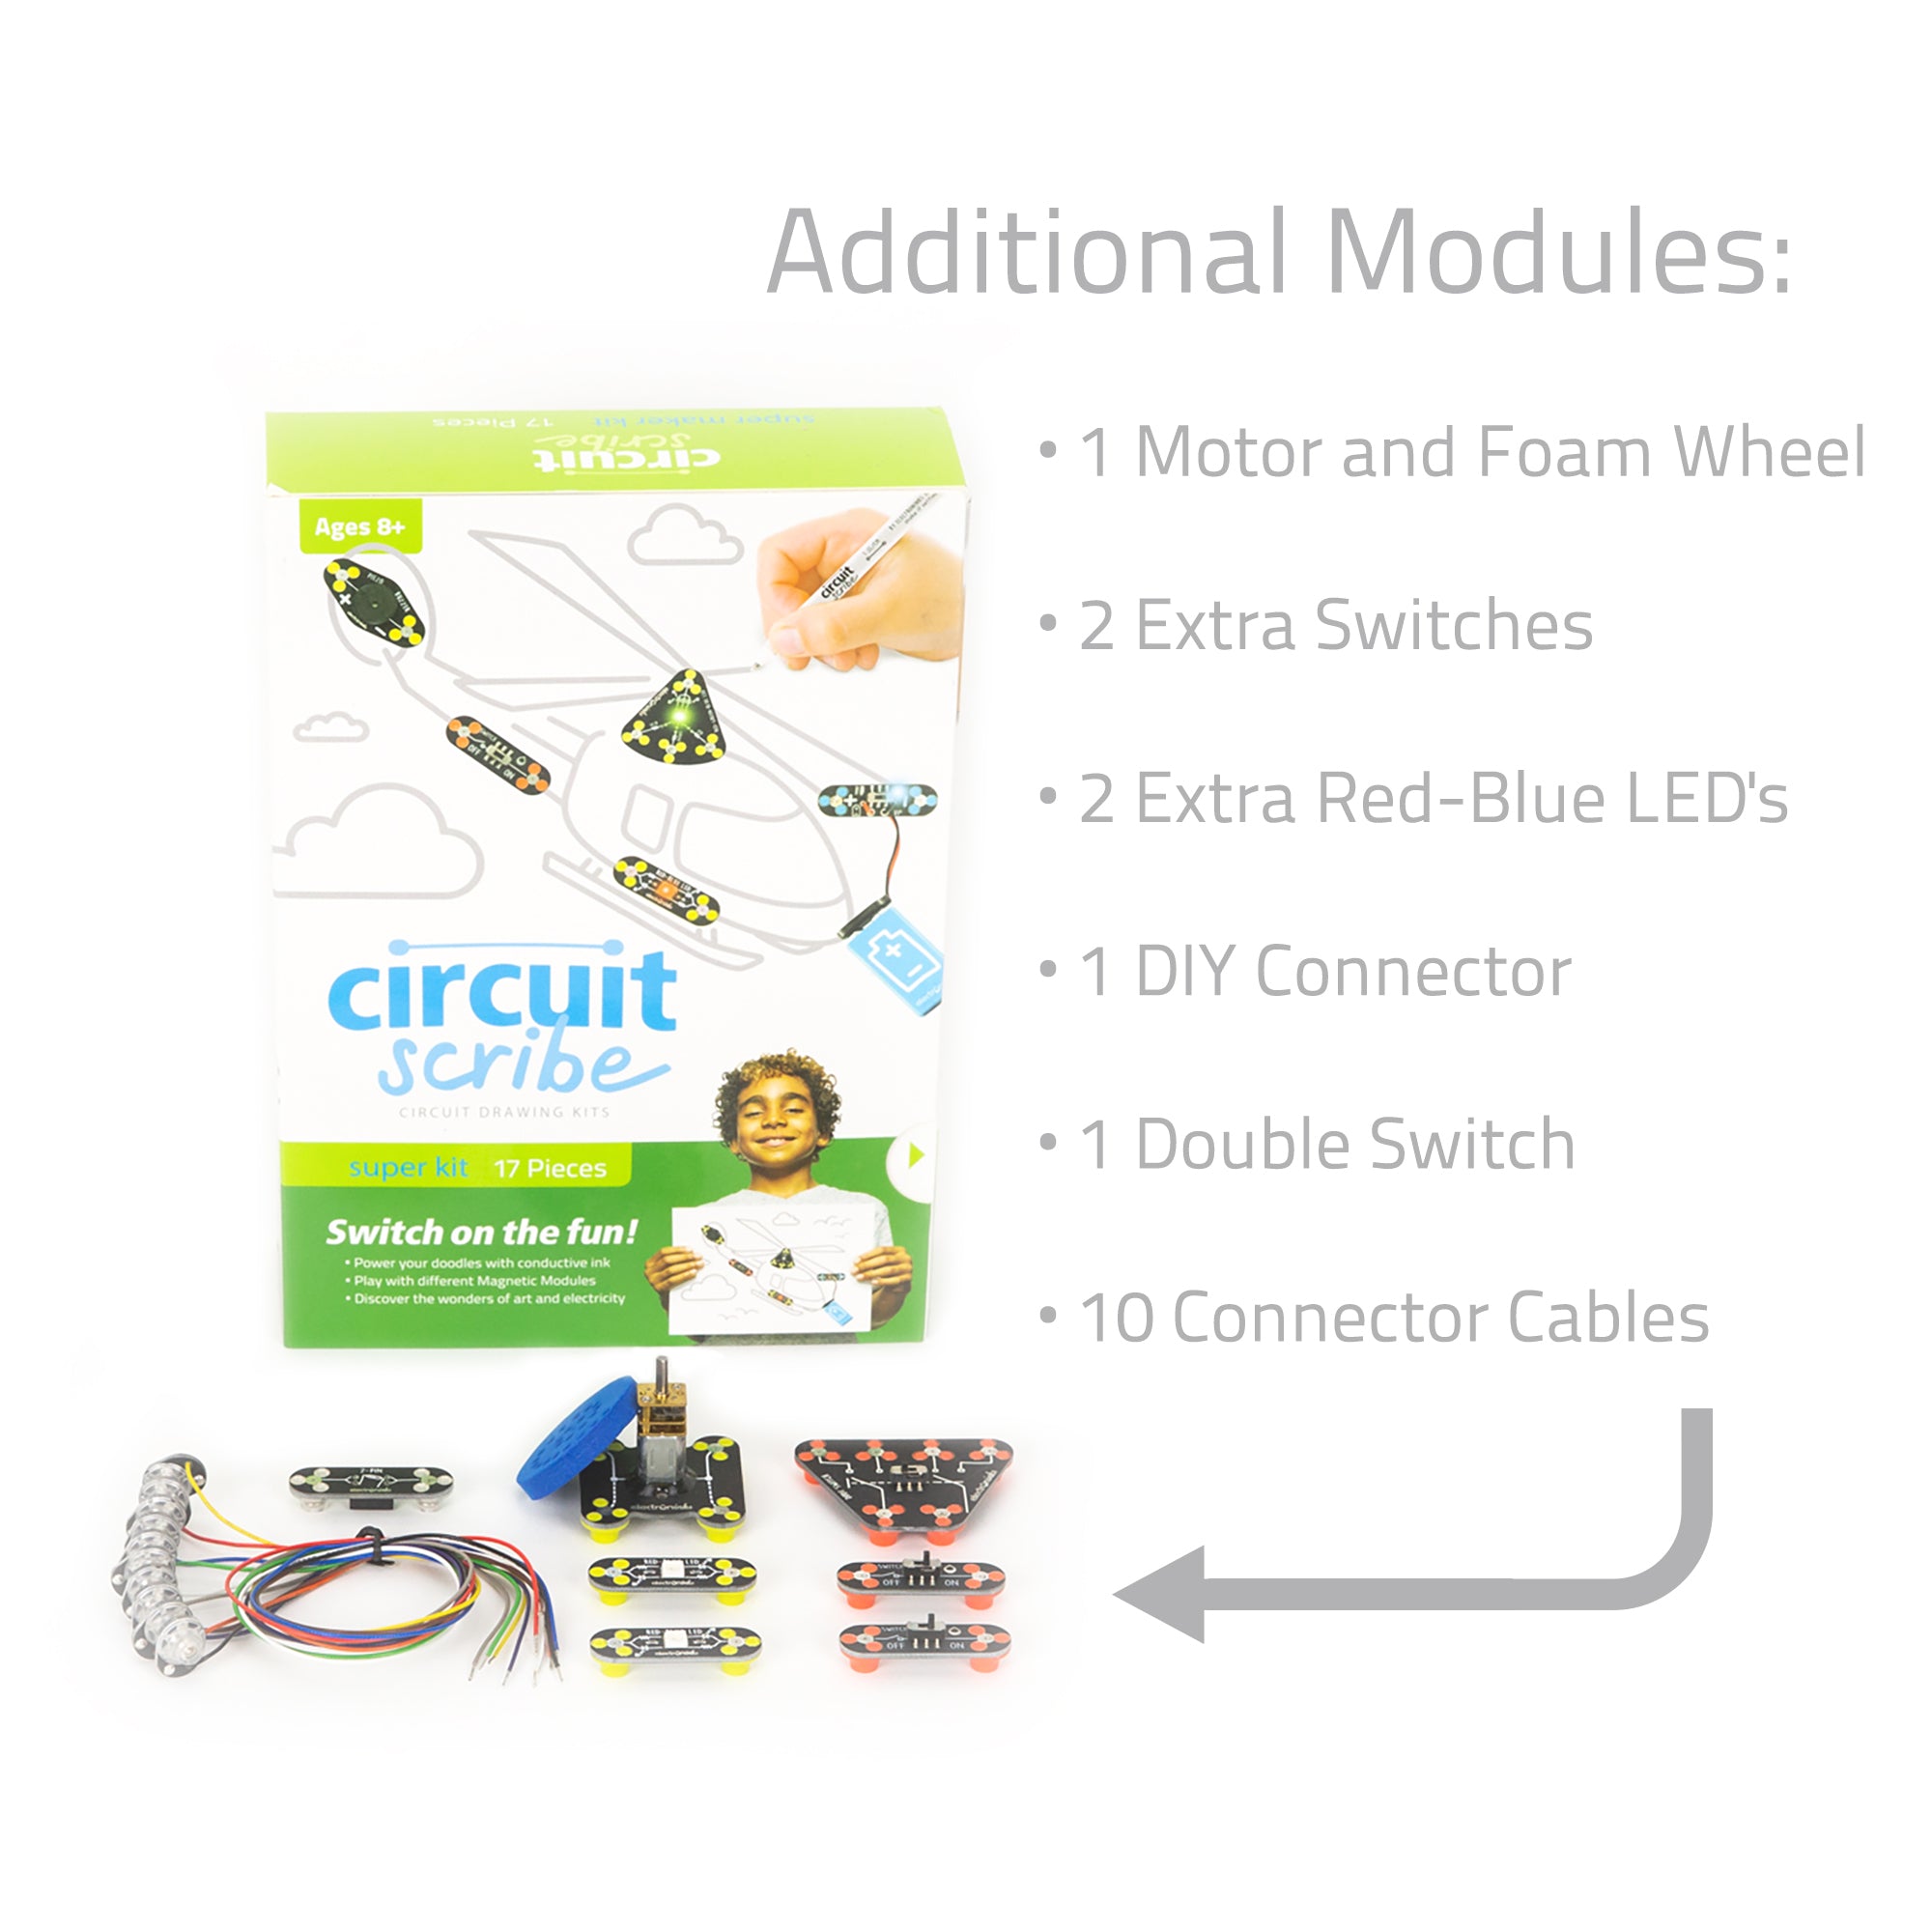 Super Kit, STEM Circuit Drawing Toys